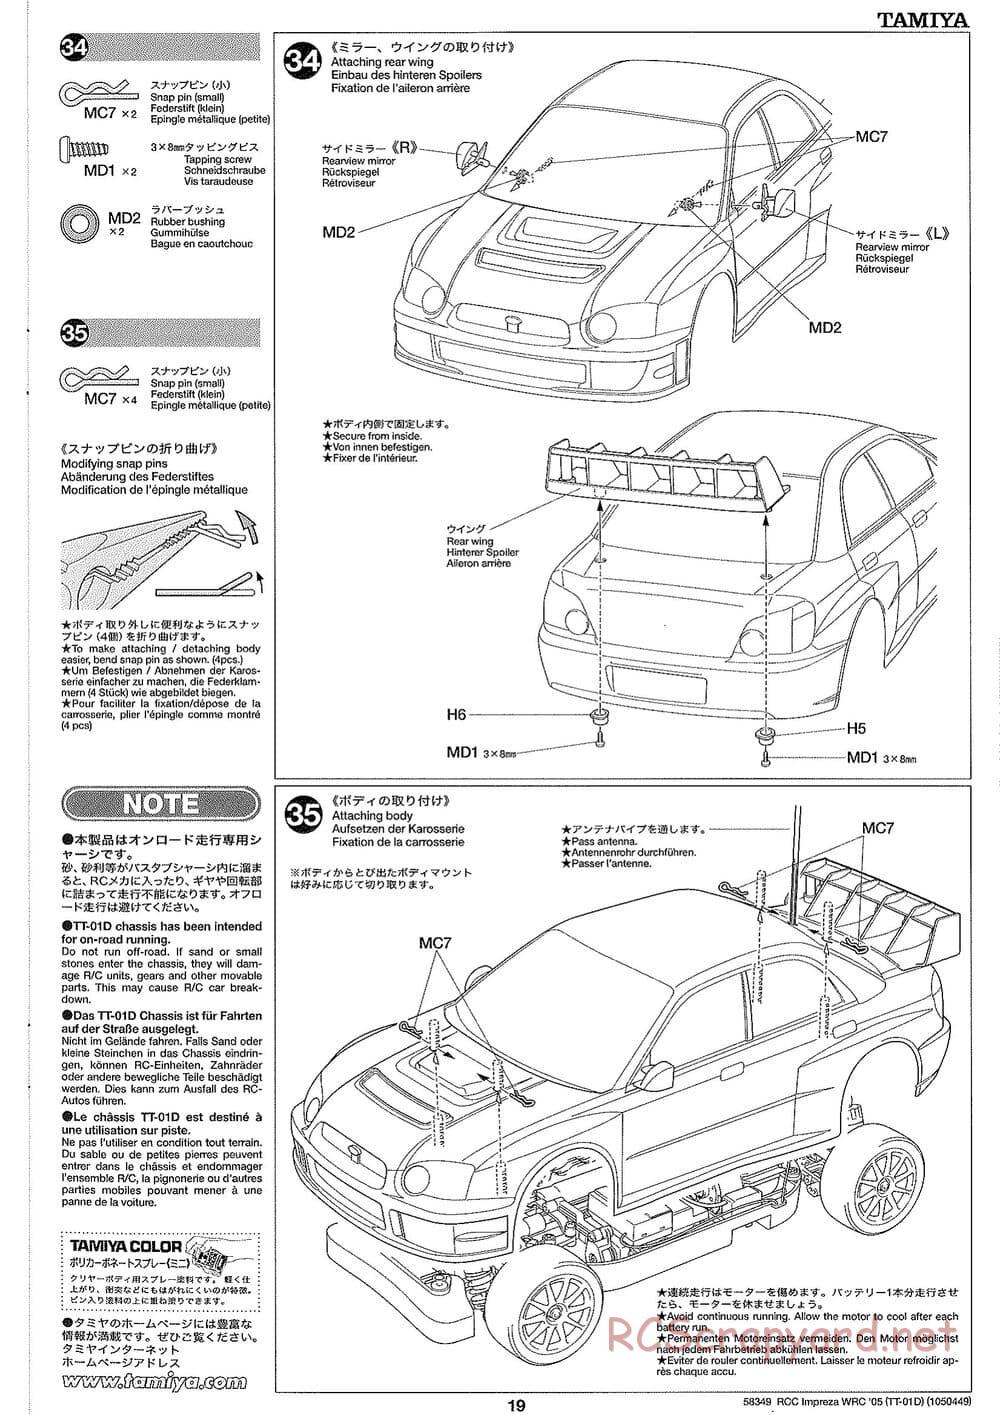 Tamiya - Subaru Impreza WRC Monte Carlo 05 - Drift Spec - TT-01D Chassis - Manual - Page 19